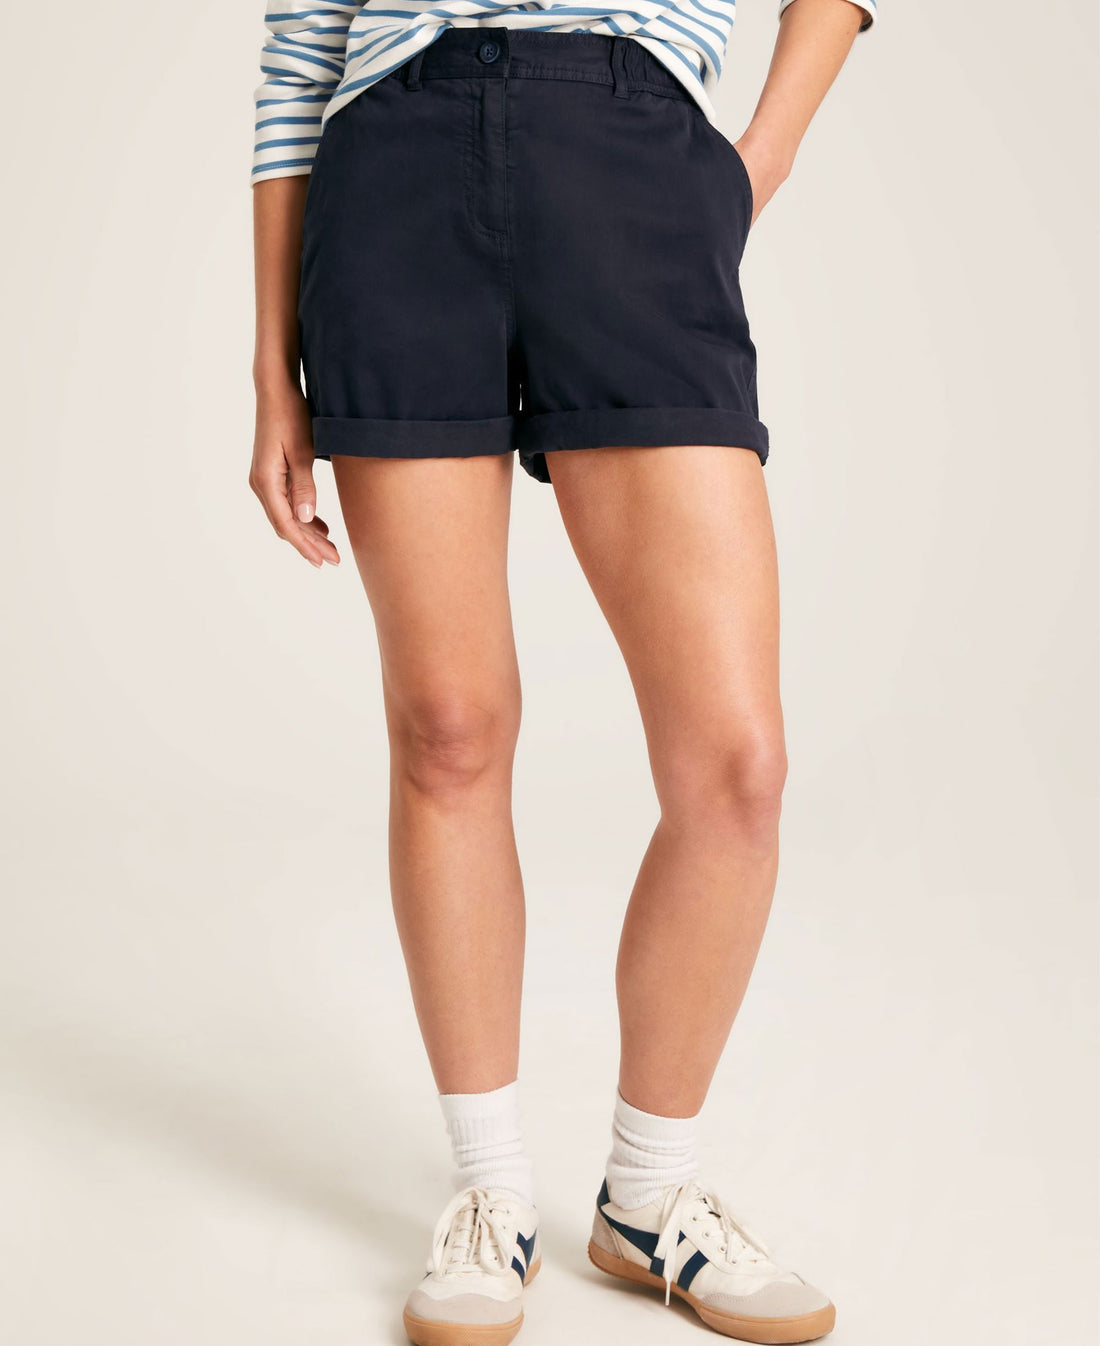 Chino Shorts - Navy